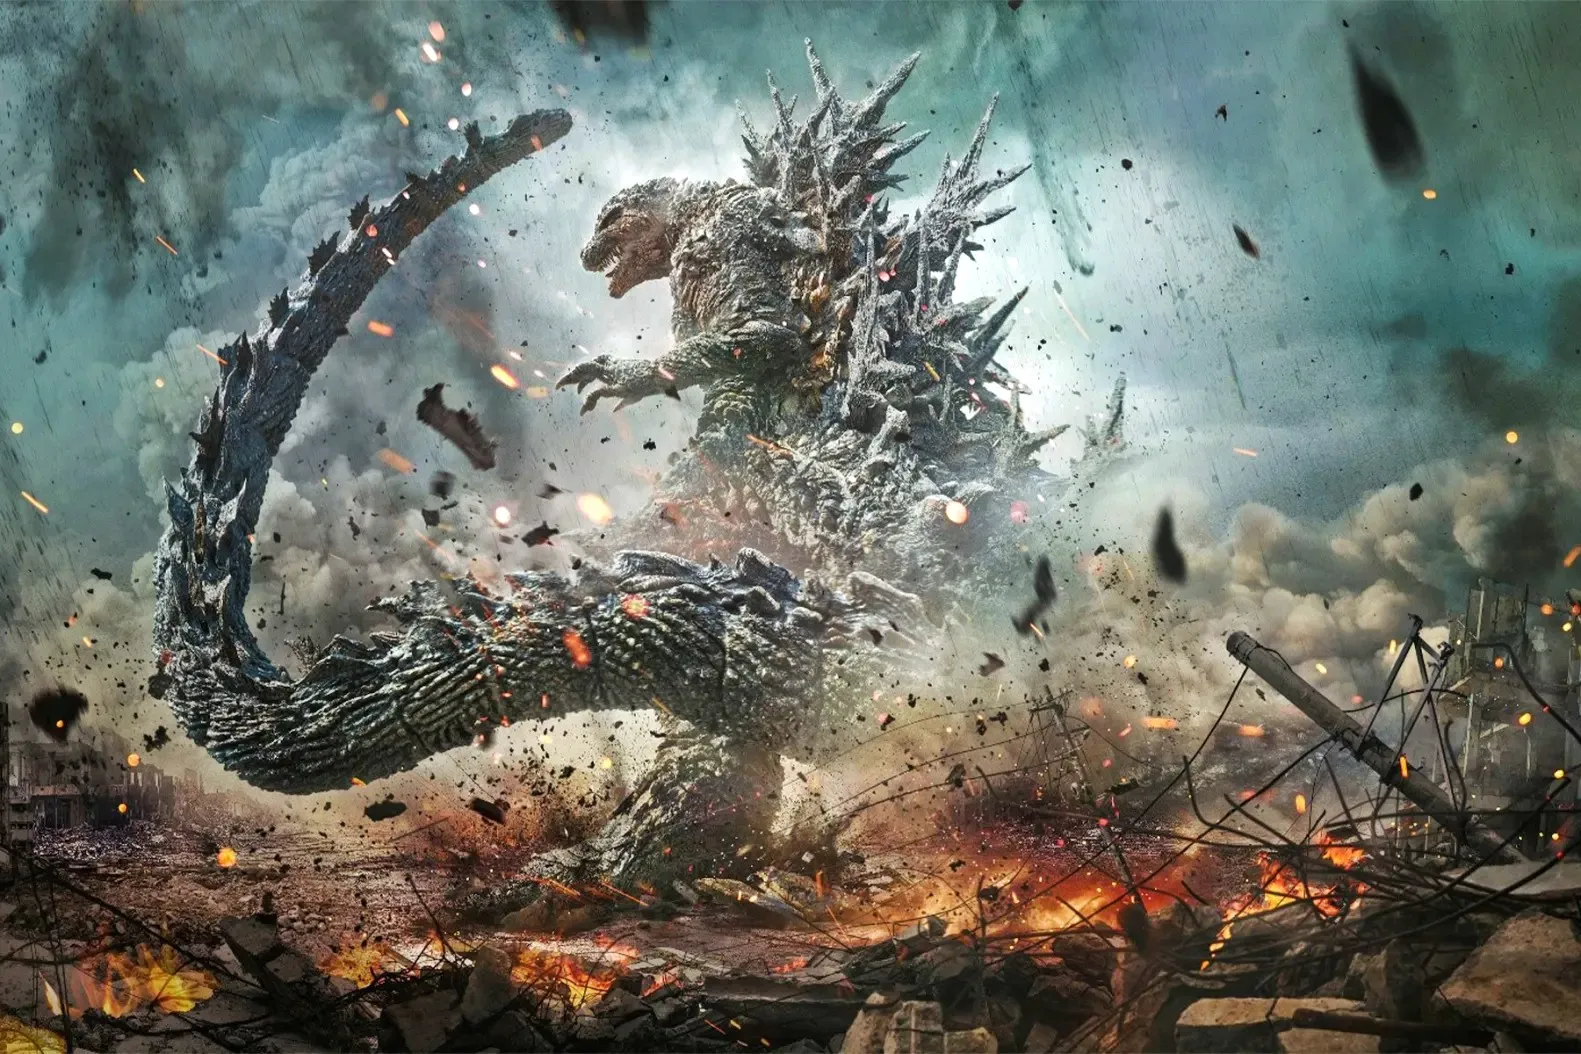 Check Out Godzilla Minus One Now Streaming on Netflix Worldwide